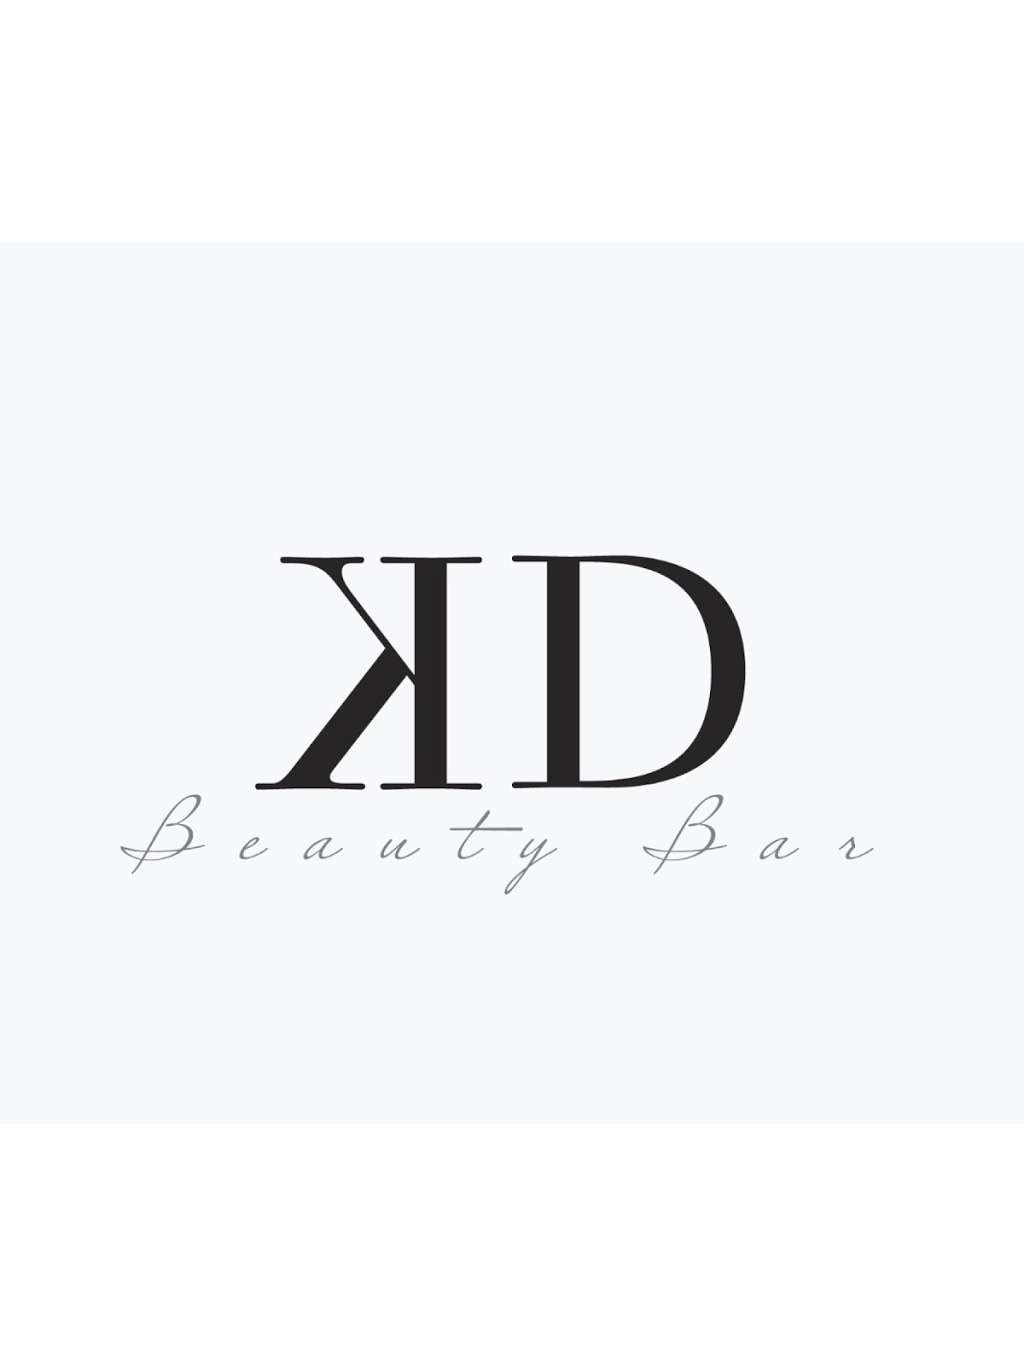 KD Beauty Bar | 22211 W Interstate 10 Frontage Rd, San Antonio, TX 78257 | Phone: (210) 878-5406